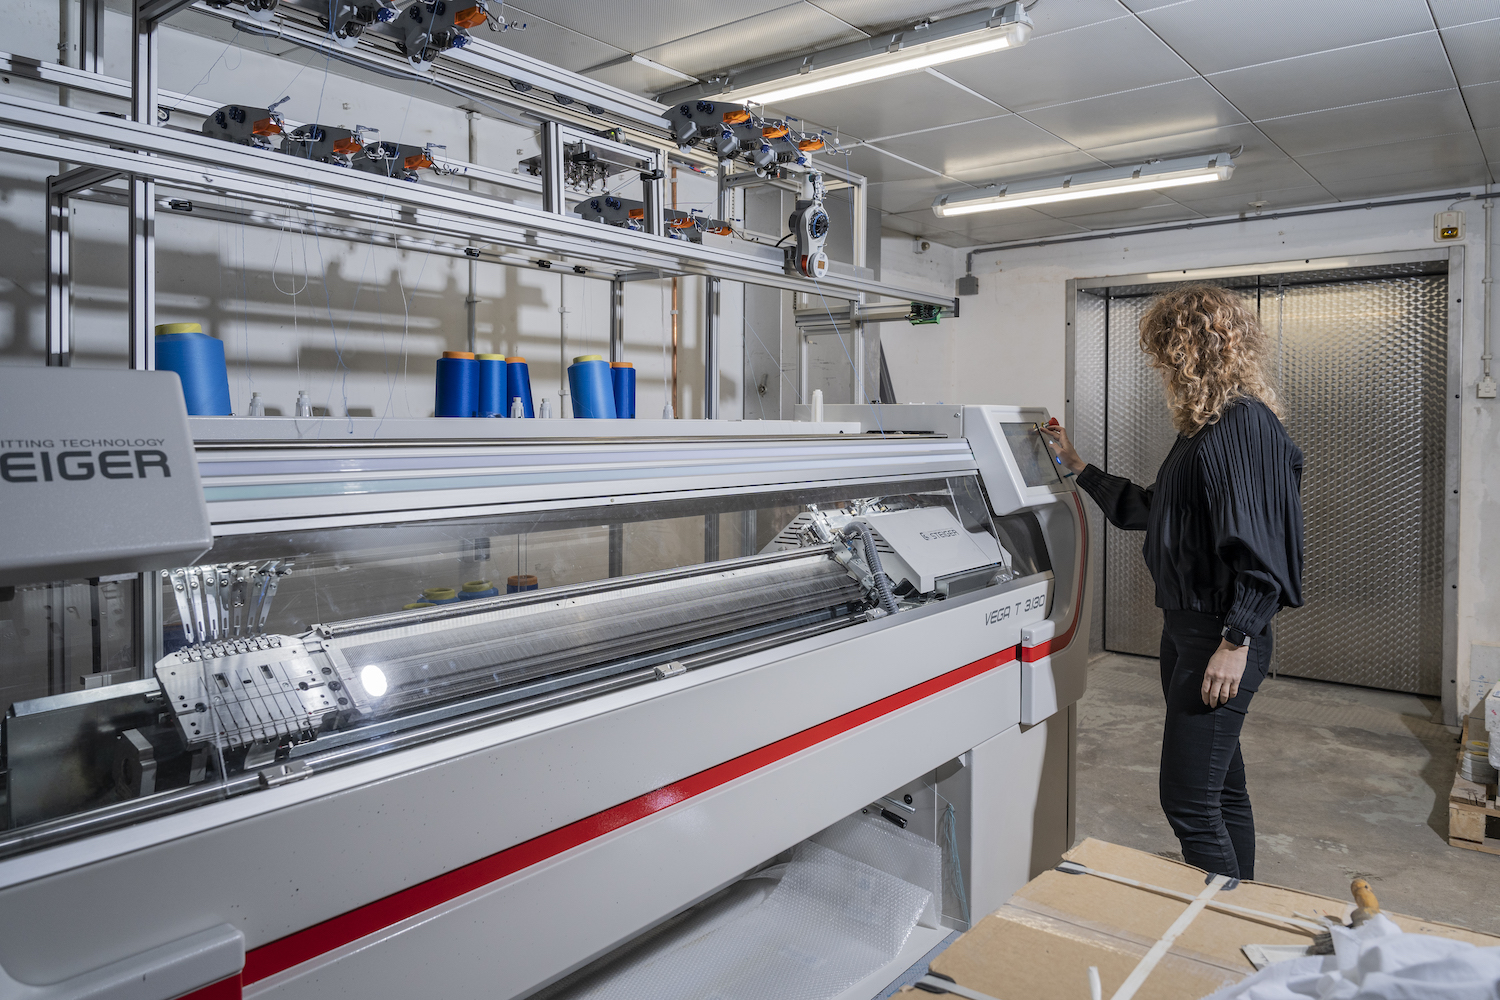 Mariana Popescu knitting in the lab on her Steiger flat knitting machine. © TU Delft | Adam Klugkist